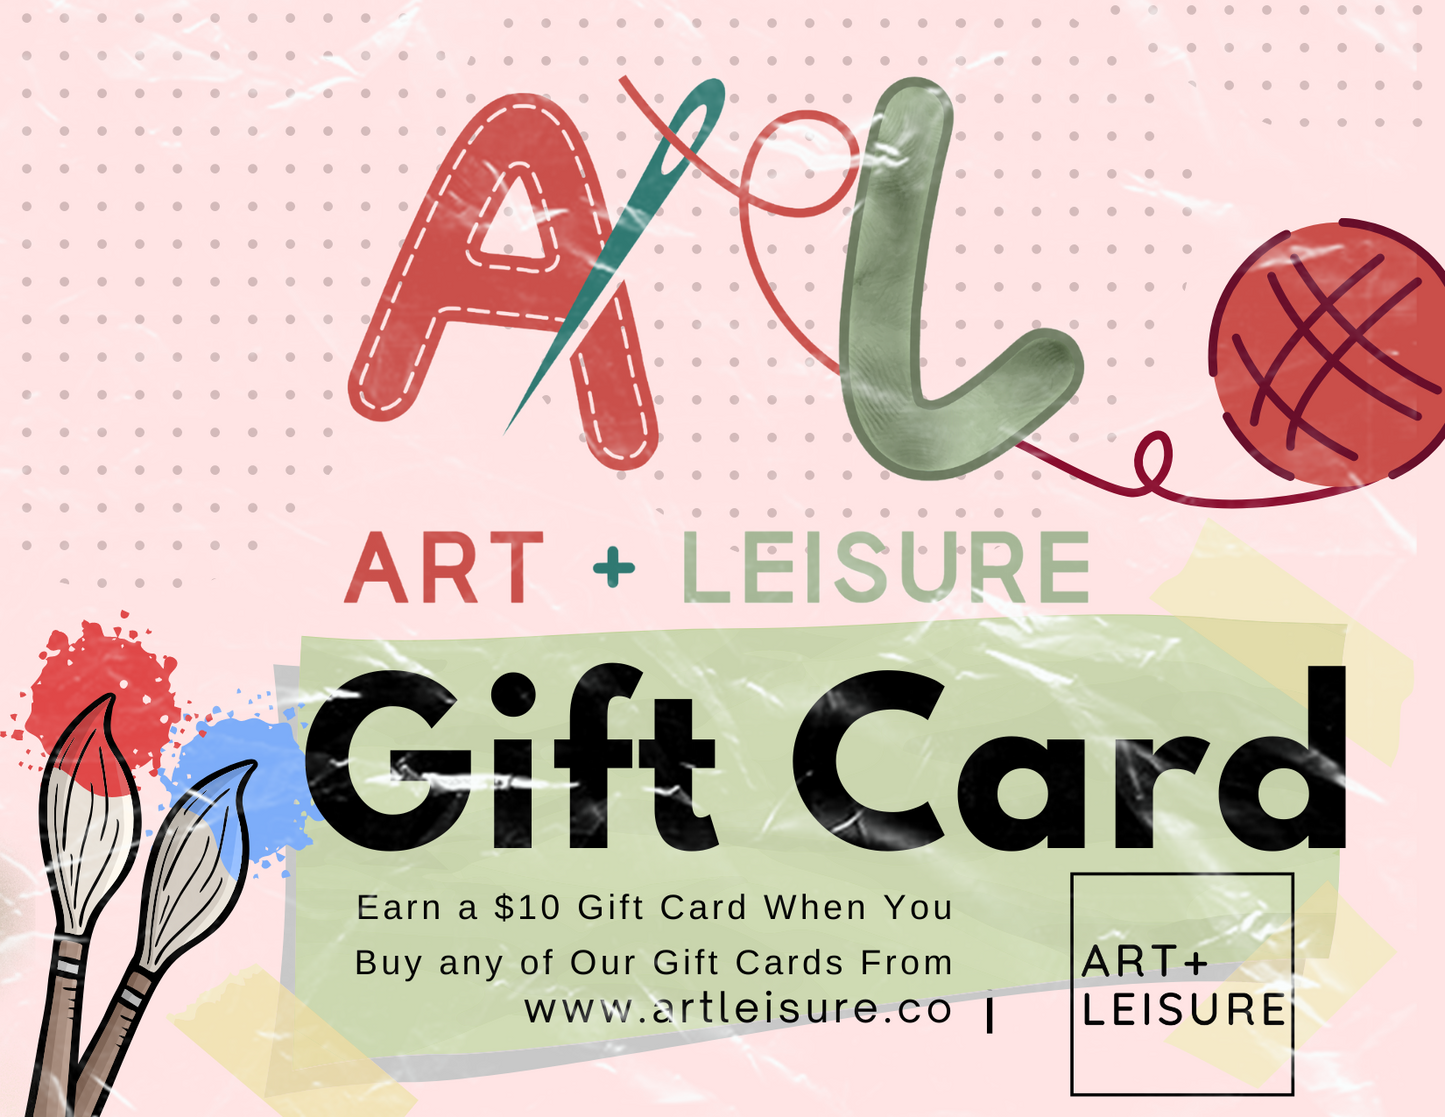 Art + Leisure Gift Card Sale